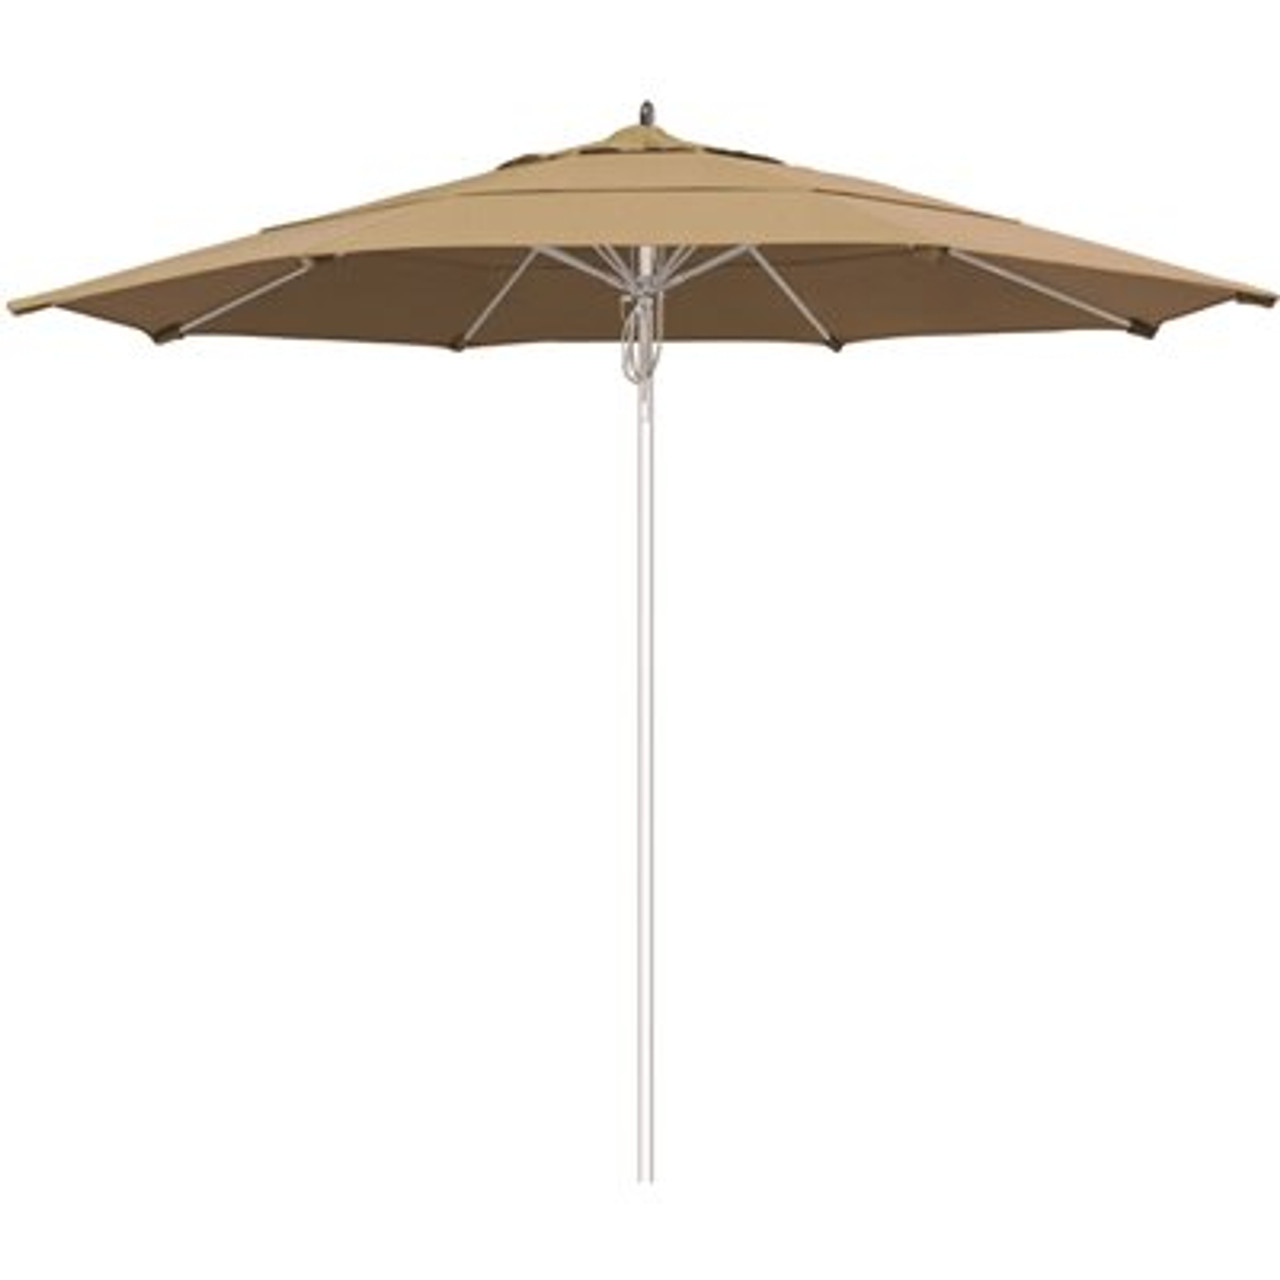 11 ft. Silver Aluminum Commercial Fiberglass Ribs Market Patio Umbrella and Pulley Lift in Heather Beige Sunbrella